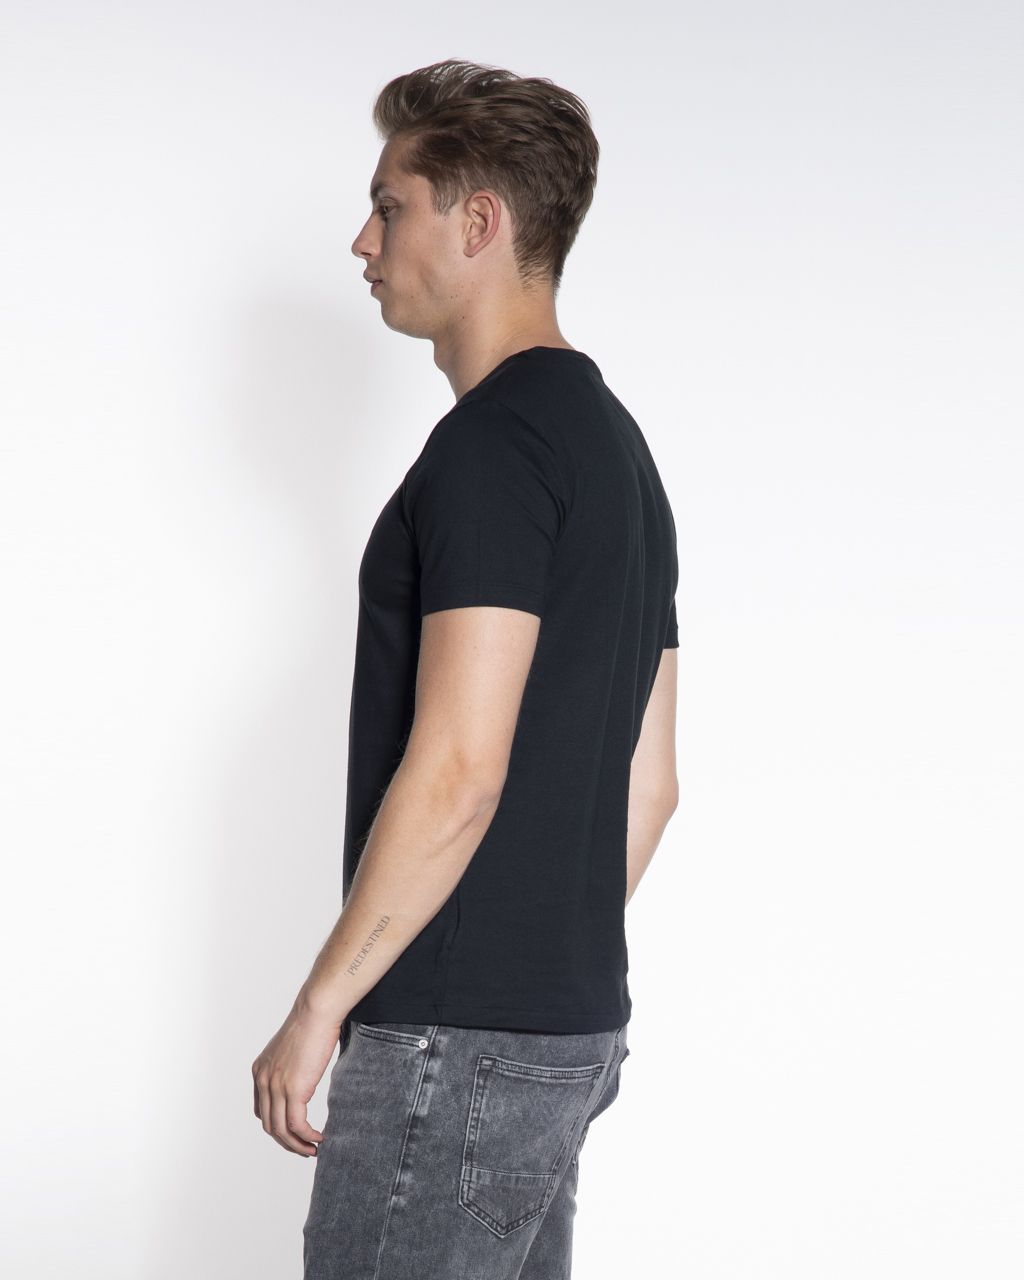 Polo Ralph Lauren Custom Slim fit T-shirt KM Zwart 047456-002-L